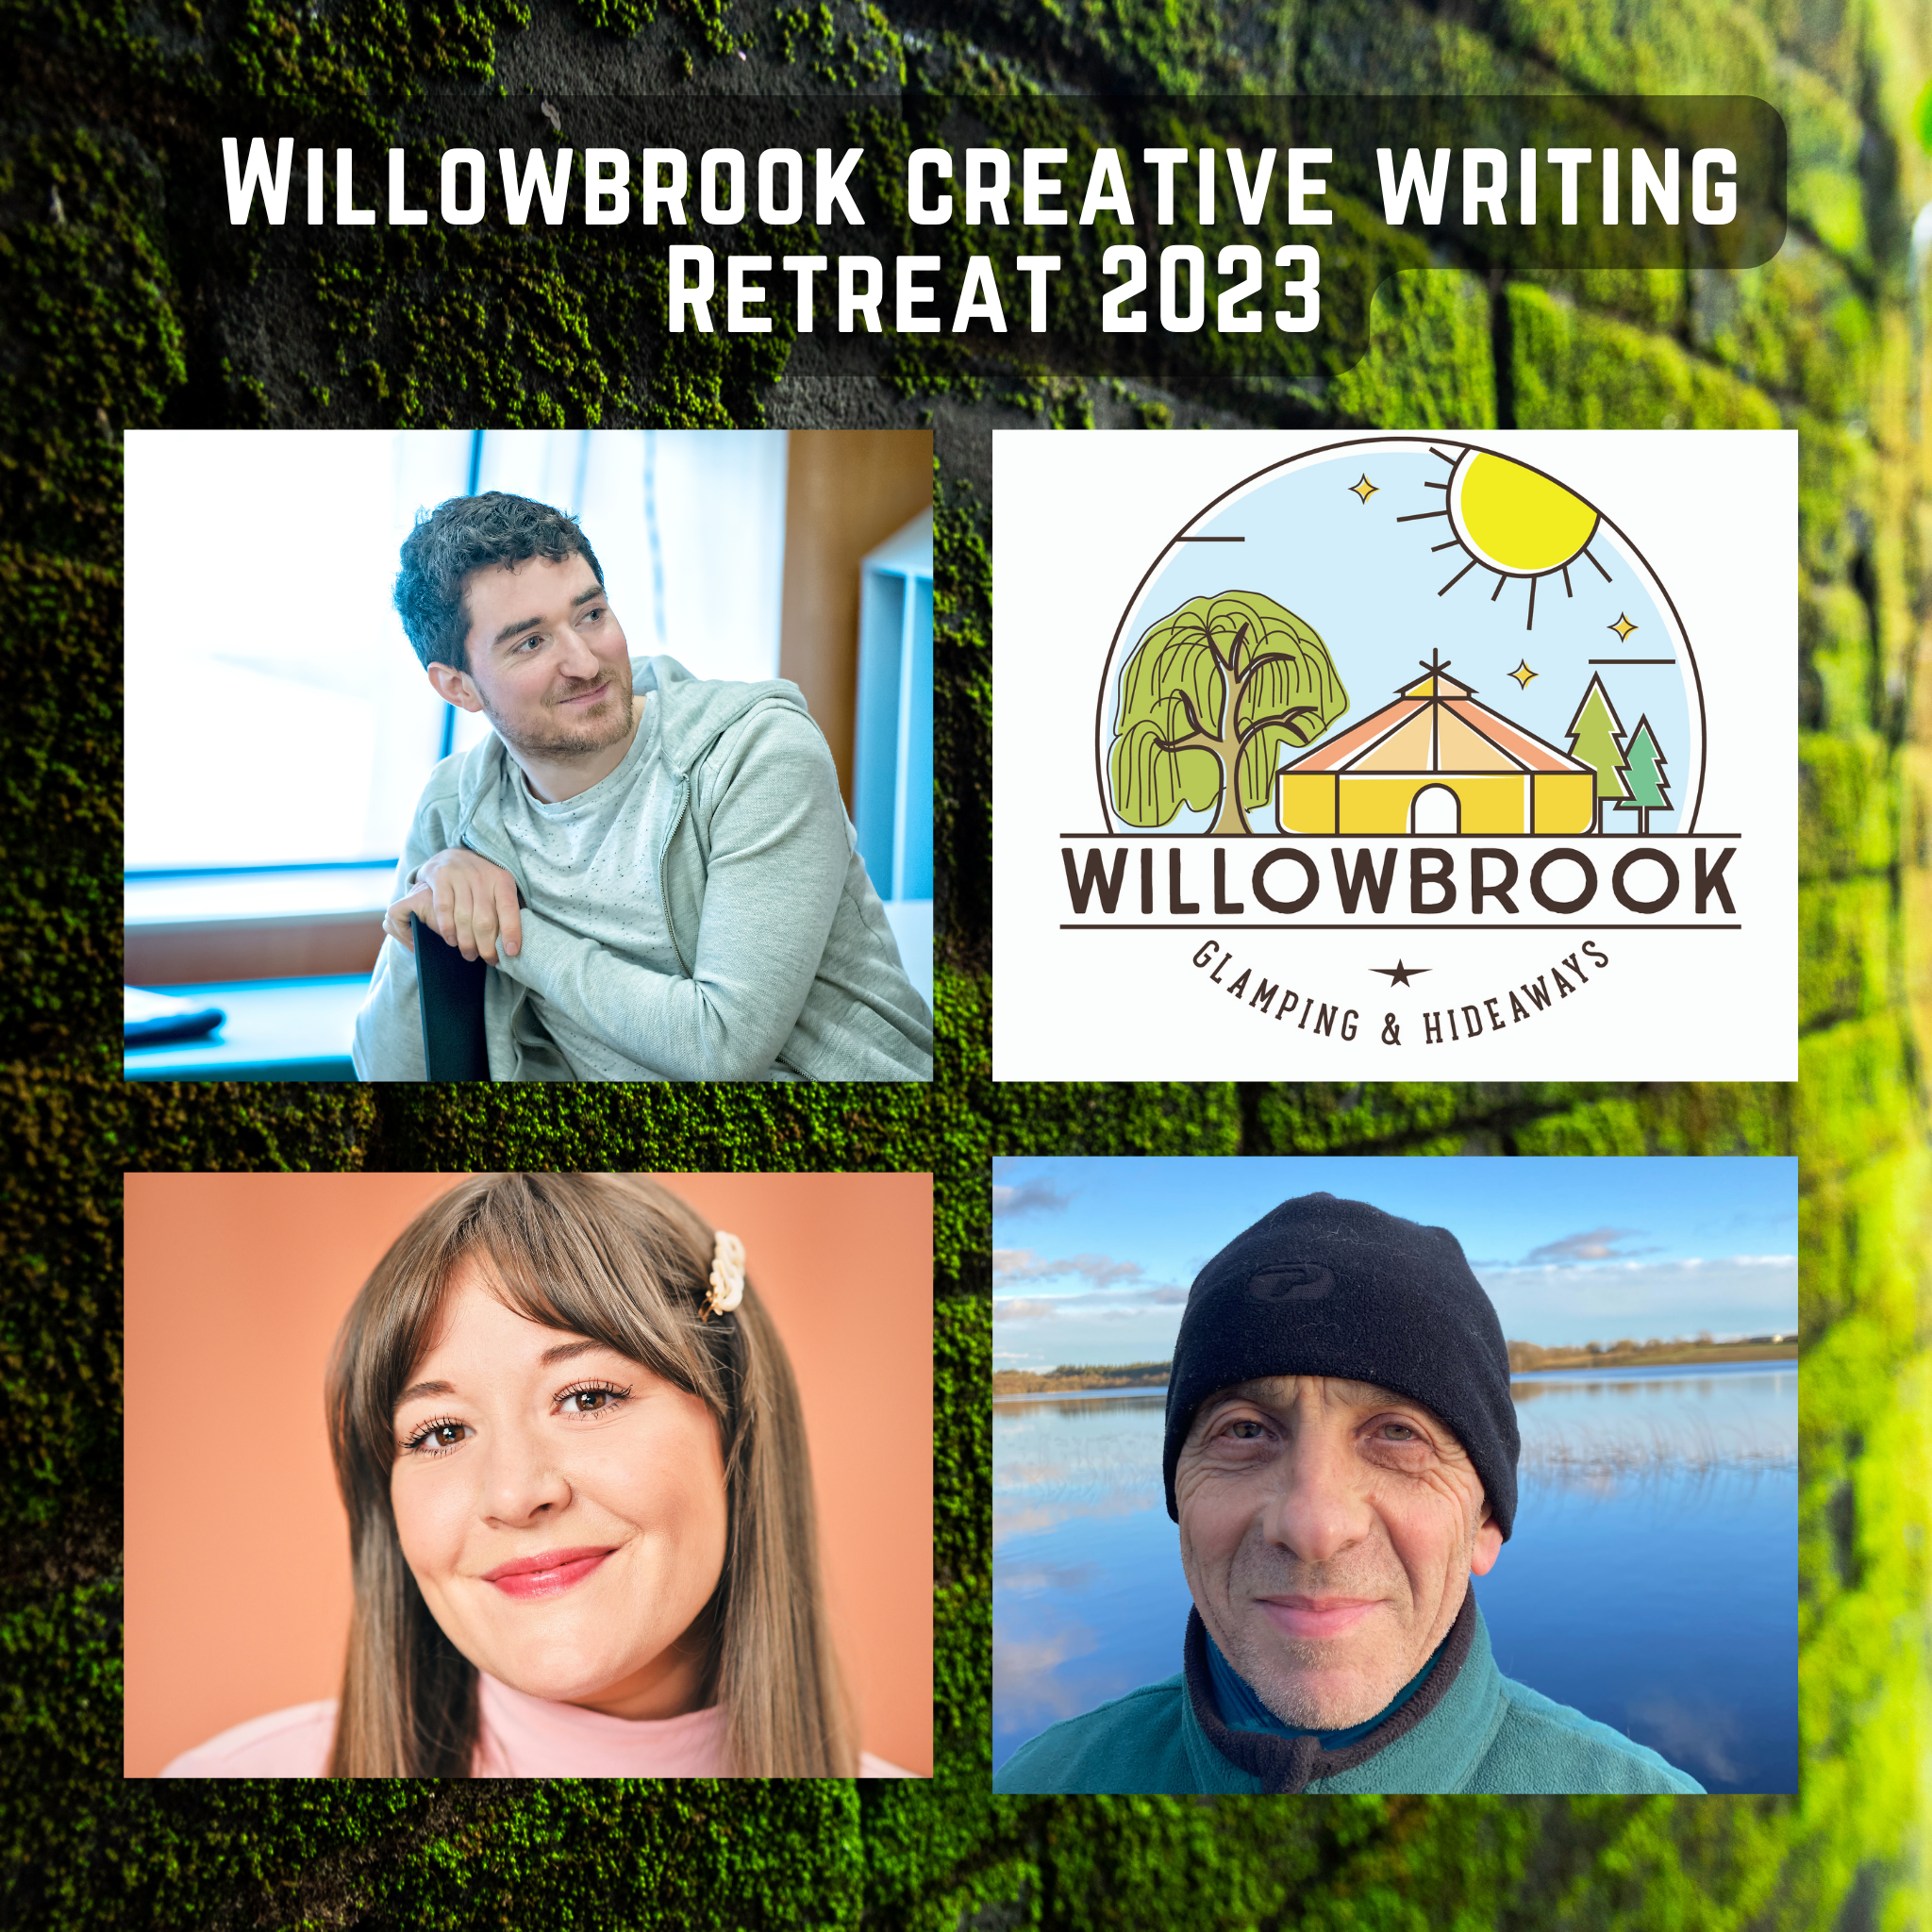 Willowbrook Creative Writing Retreat 2023